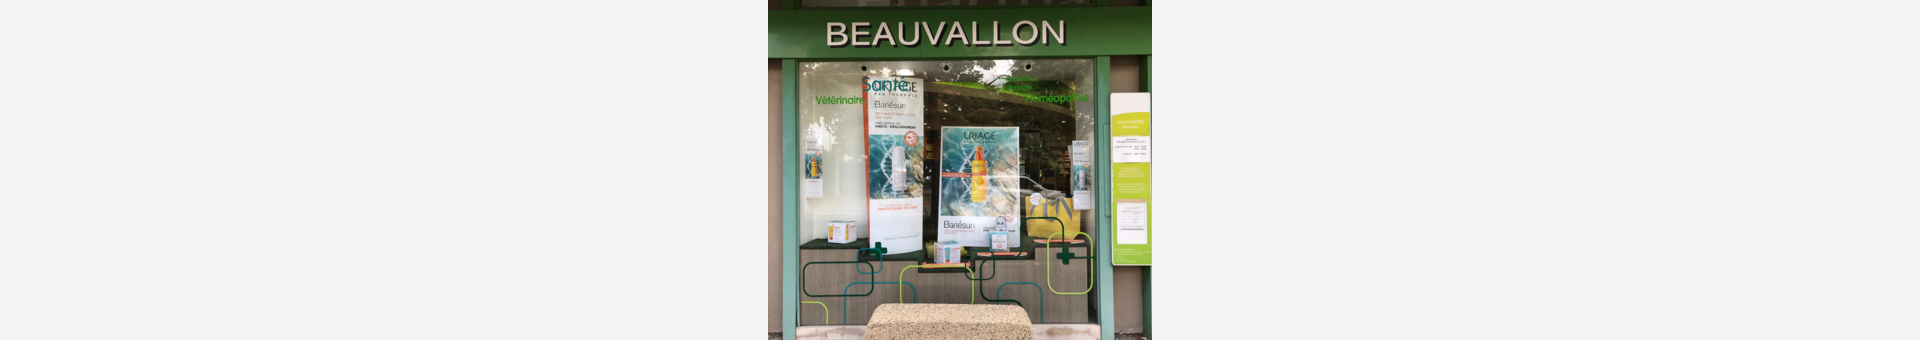 Pharmacie Beauvallon,Saint-Priest